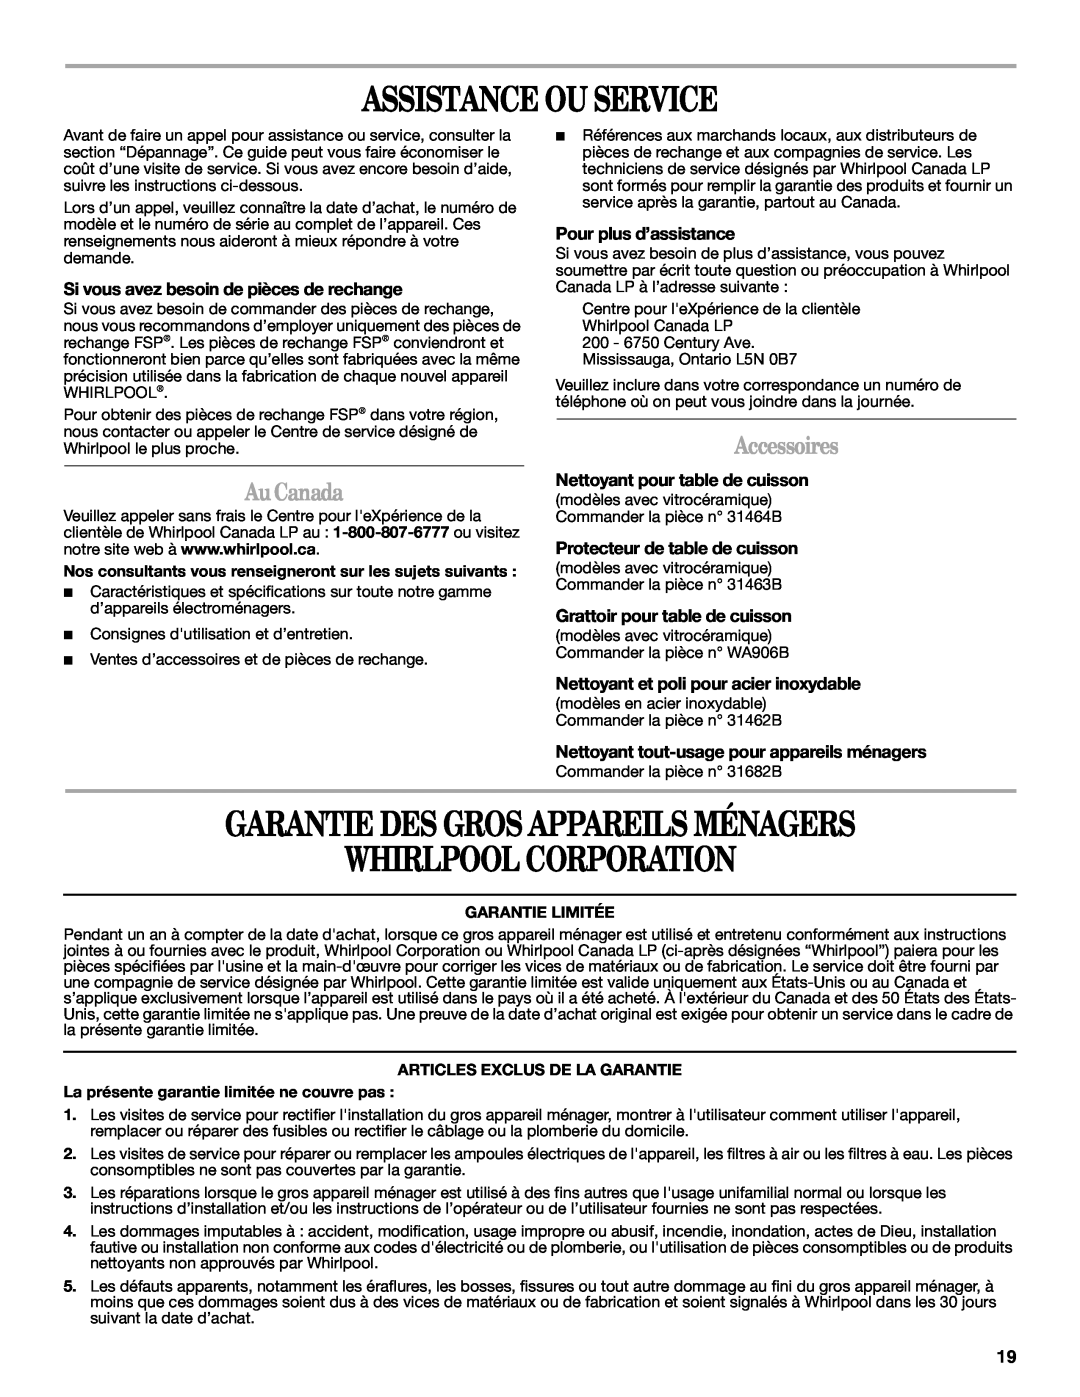 Whirlpool GCI3061XB manual Assistance Ou Service, Garantie Des Gros Appareils Ménagers Whirlpool Corporation, Au Canada 